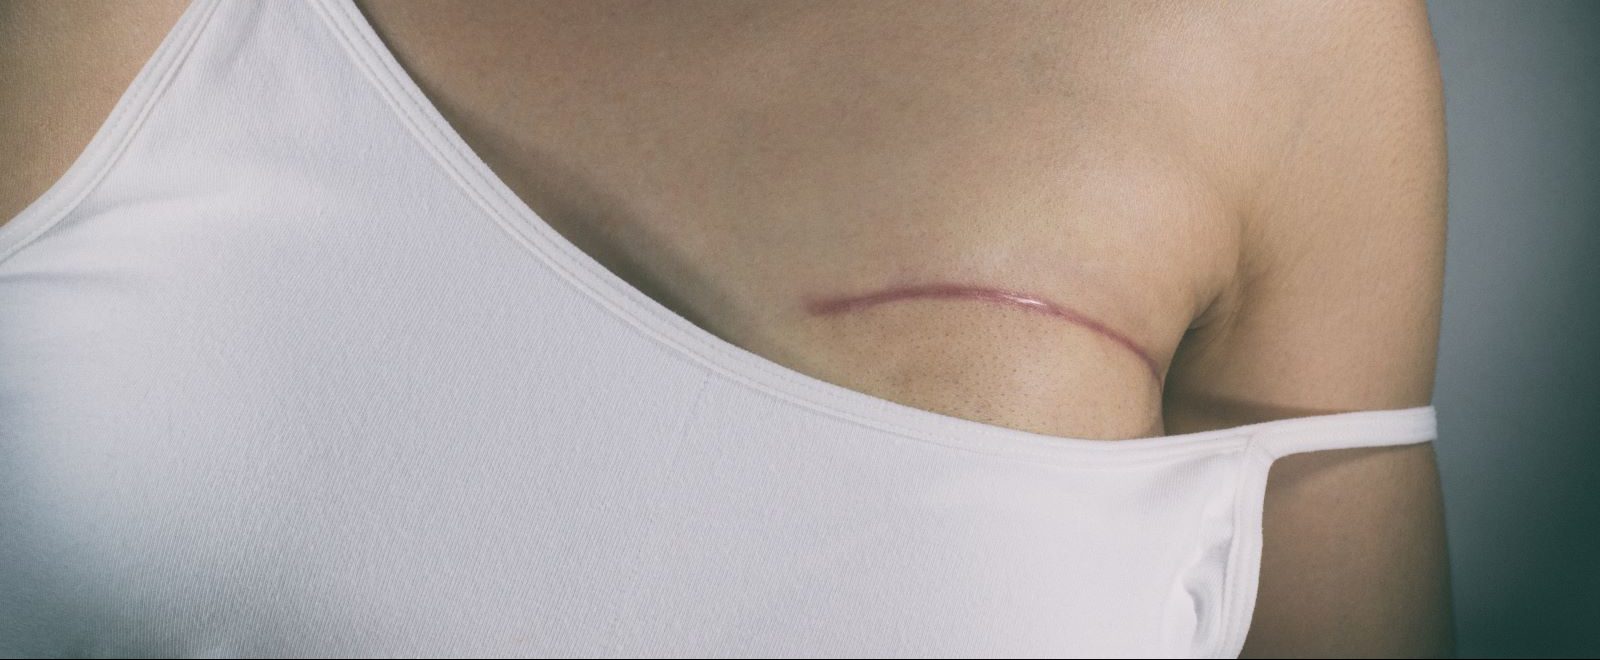 Breast cancer survivor shows her scar.